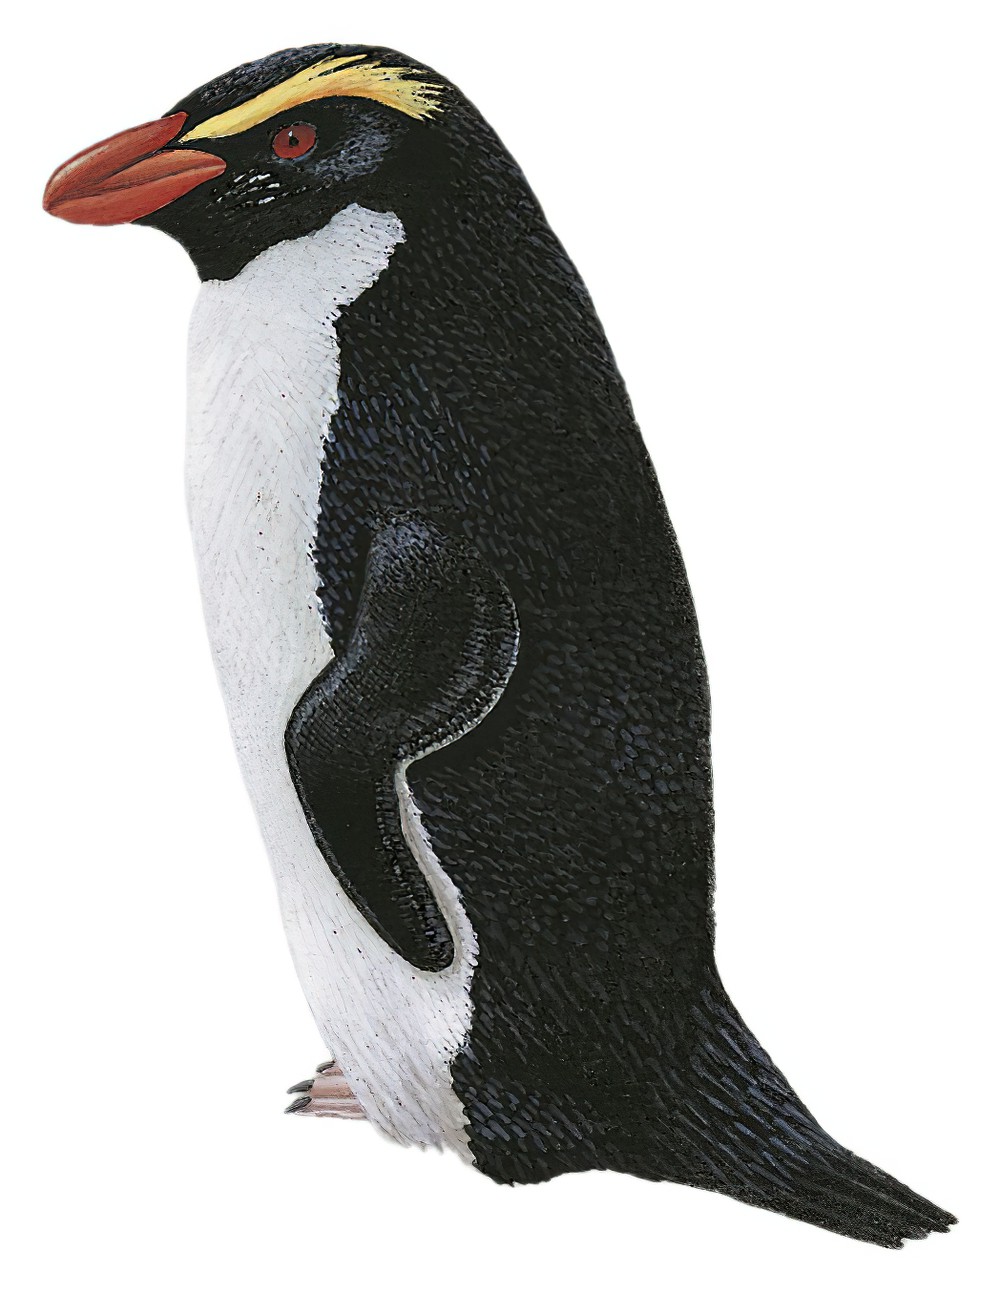 Fiordland Penguin / Eudyptes pachyrhynchus